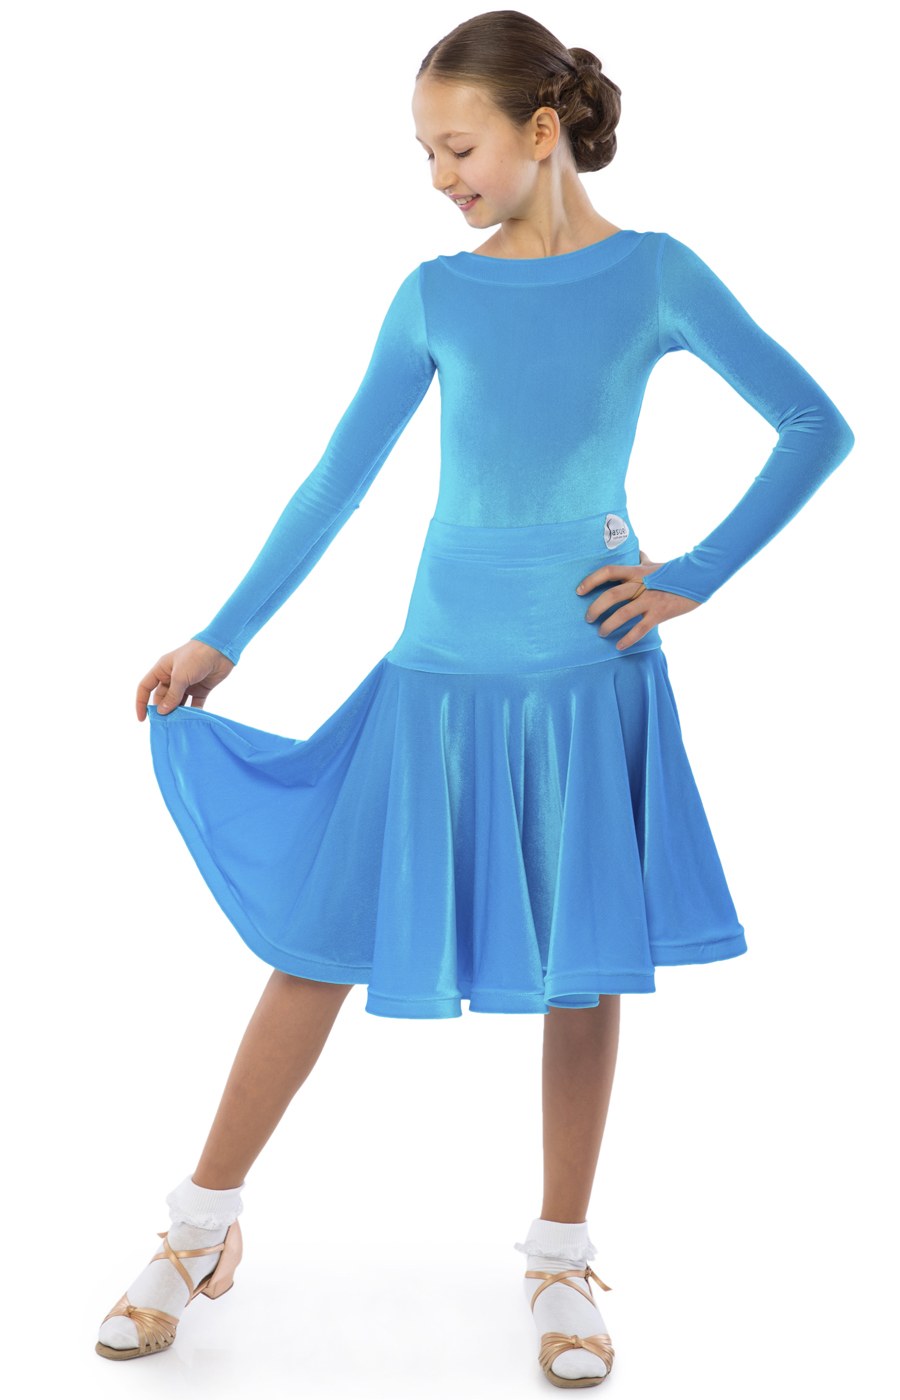 Teen Girl Blue Juvenile Practice Ballroom Dress